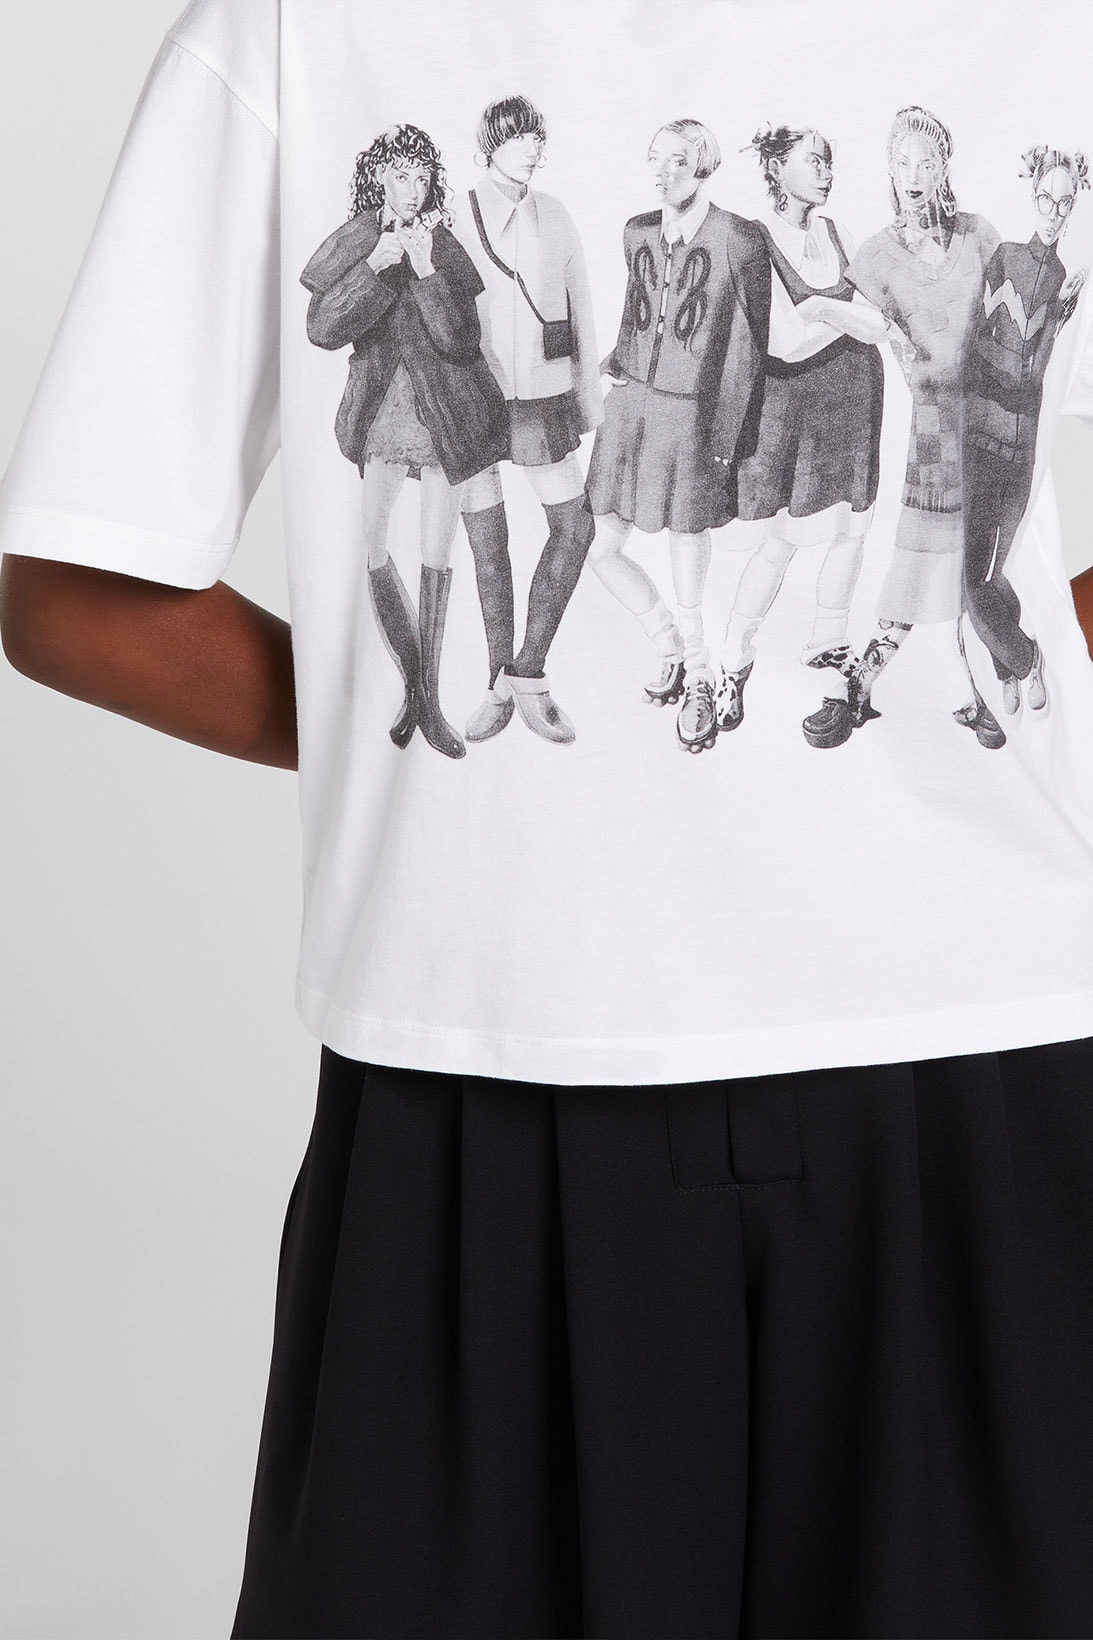 Opening Ceremony "School Girls" Collection Solange Chloe Sevigny Bjork Ali Wong T-shirts Release 